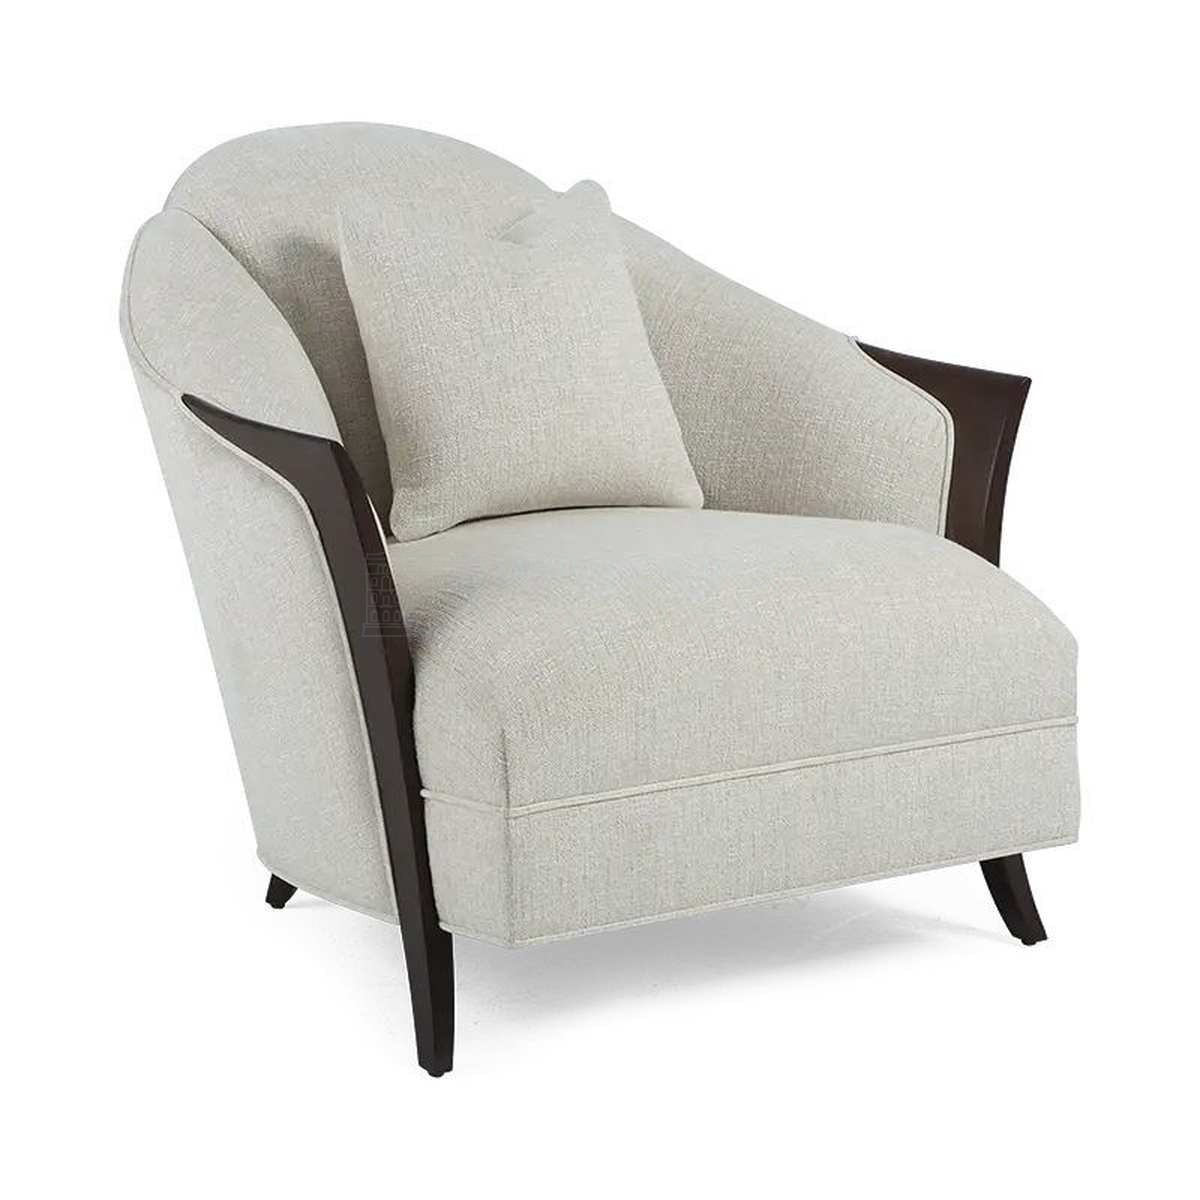 Кресло Emmanuelle armchair  из США фабрики CHRISTOPHER GUY